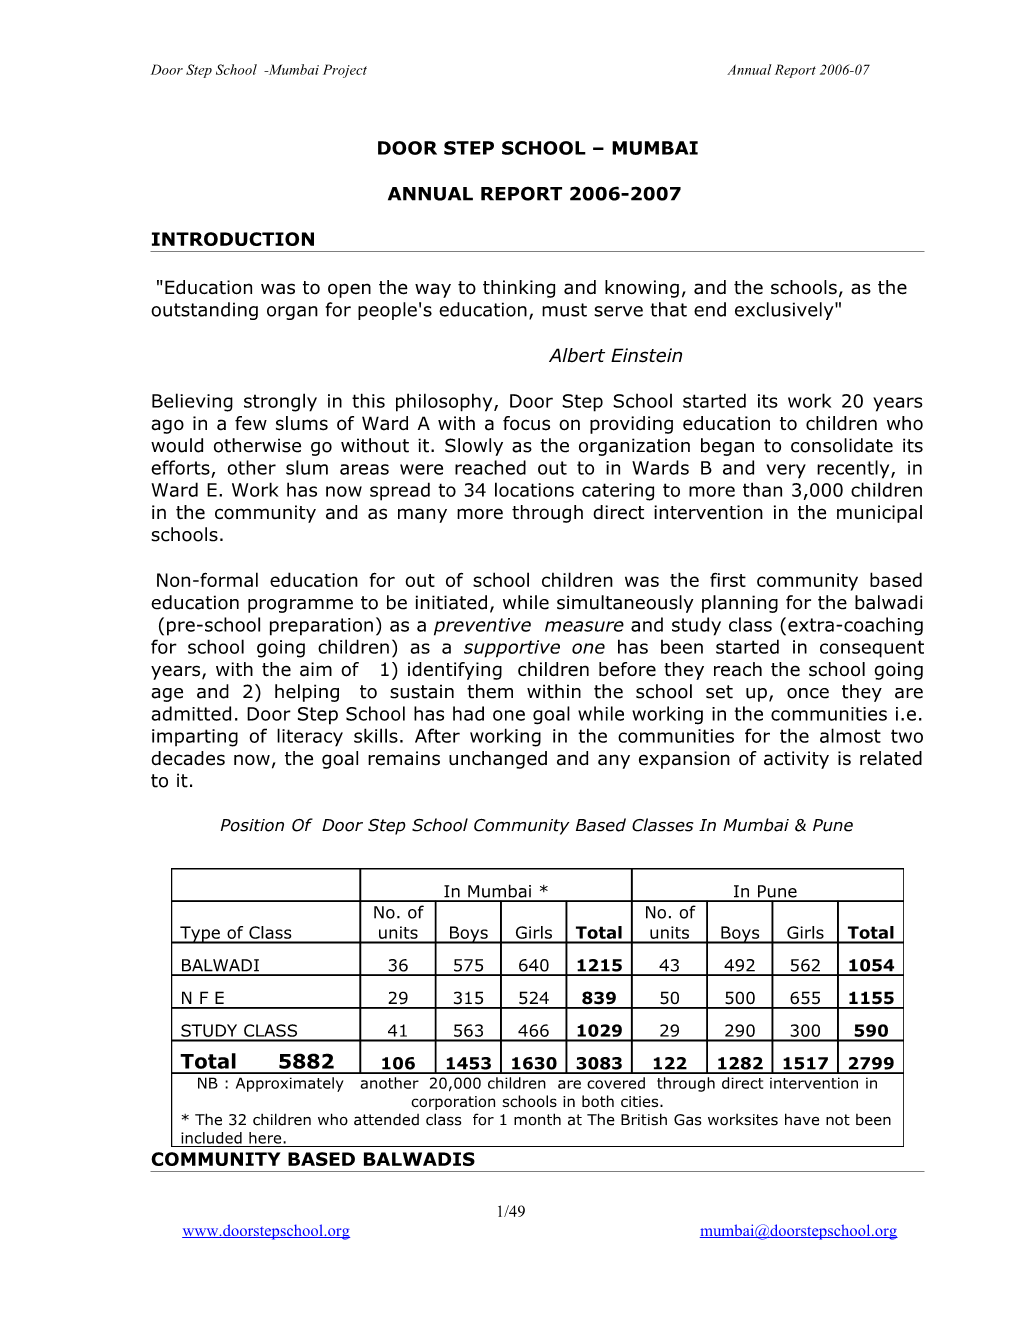 Annual Report 06-07 Draft